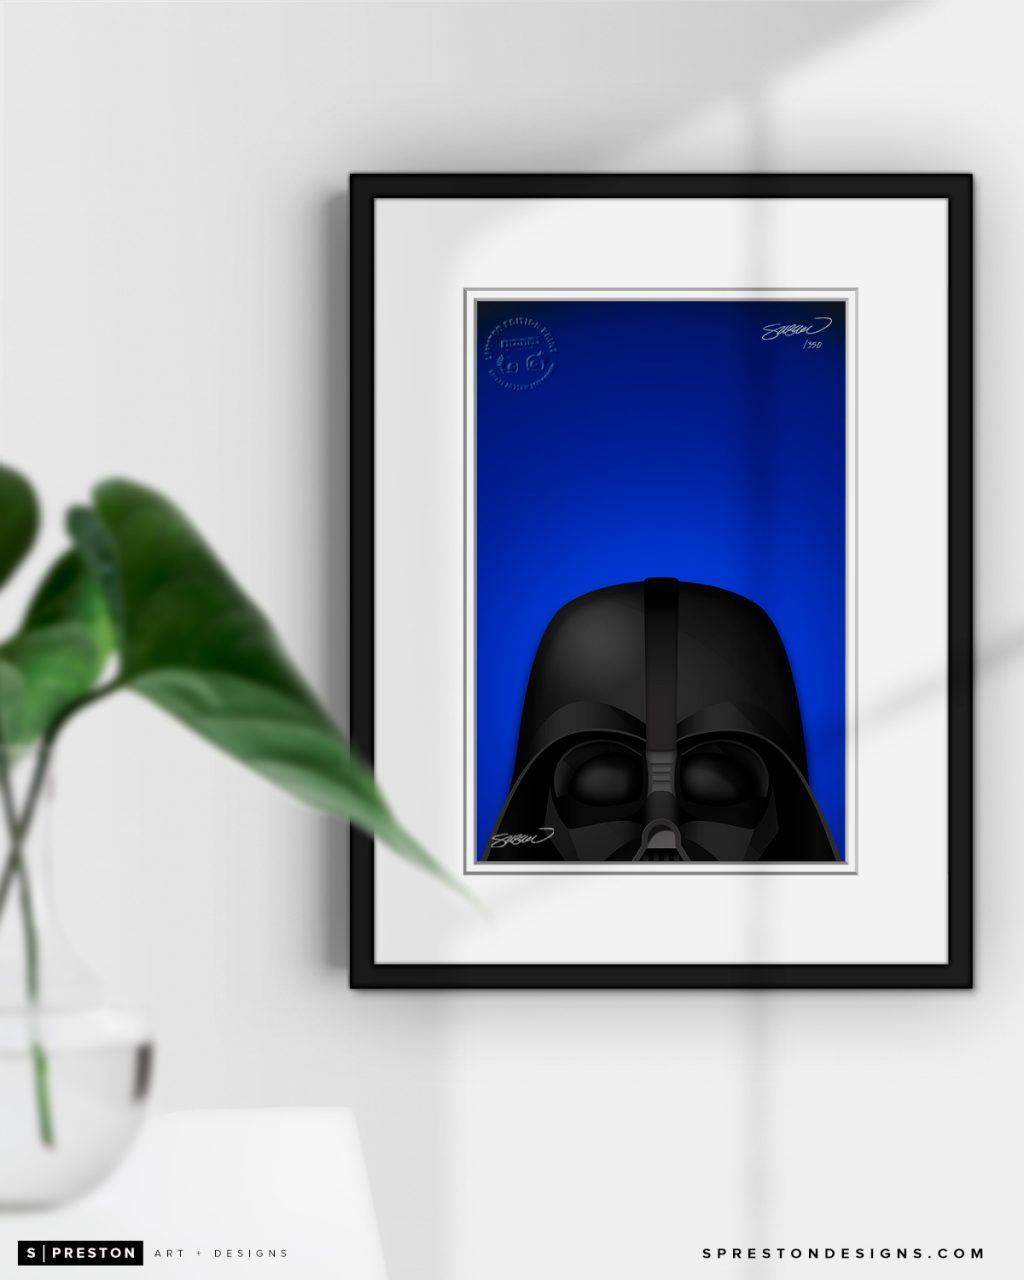 Darth Vader print (S.Preston)